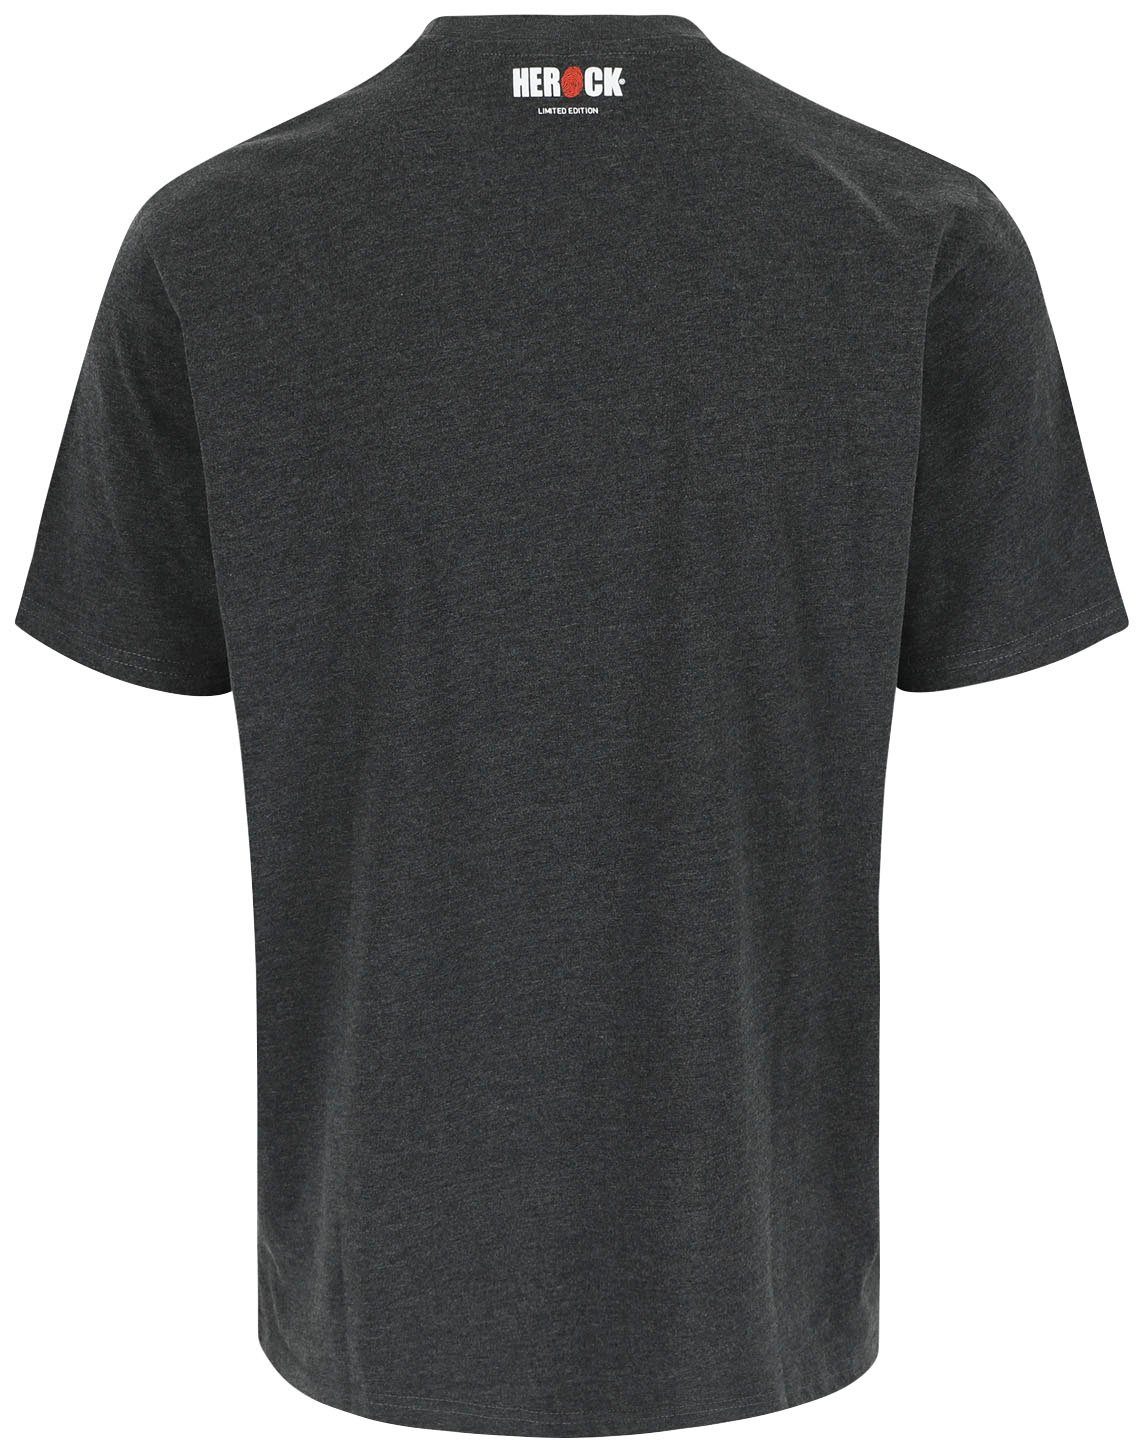 Limited Maximus Herock Edition T-Shirt